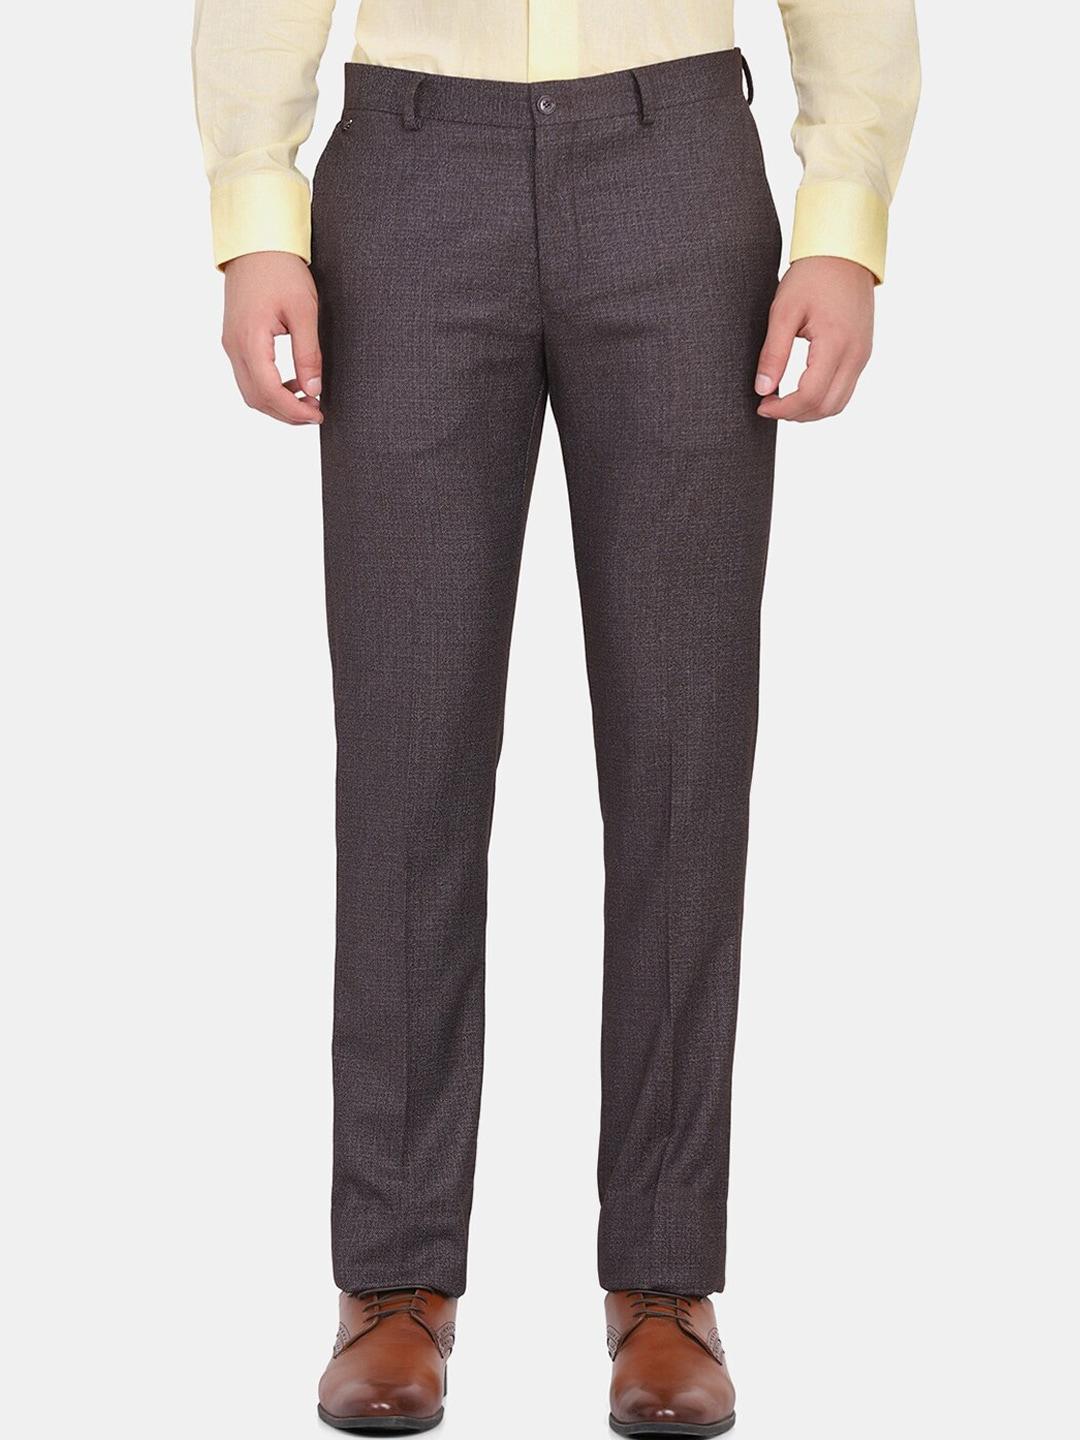 blackberrys-men-brown-slim-fit-low-rise-trousers